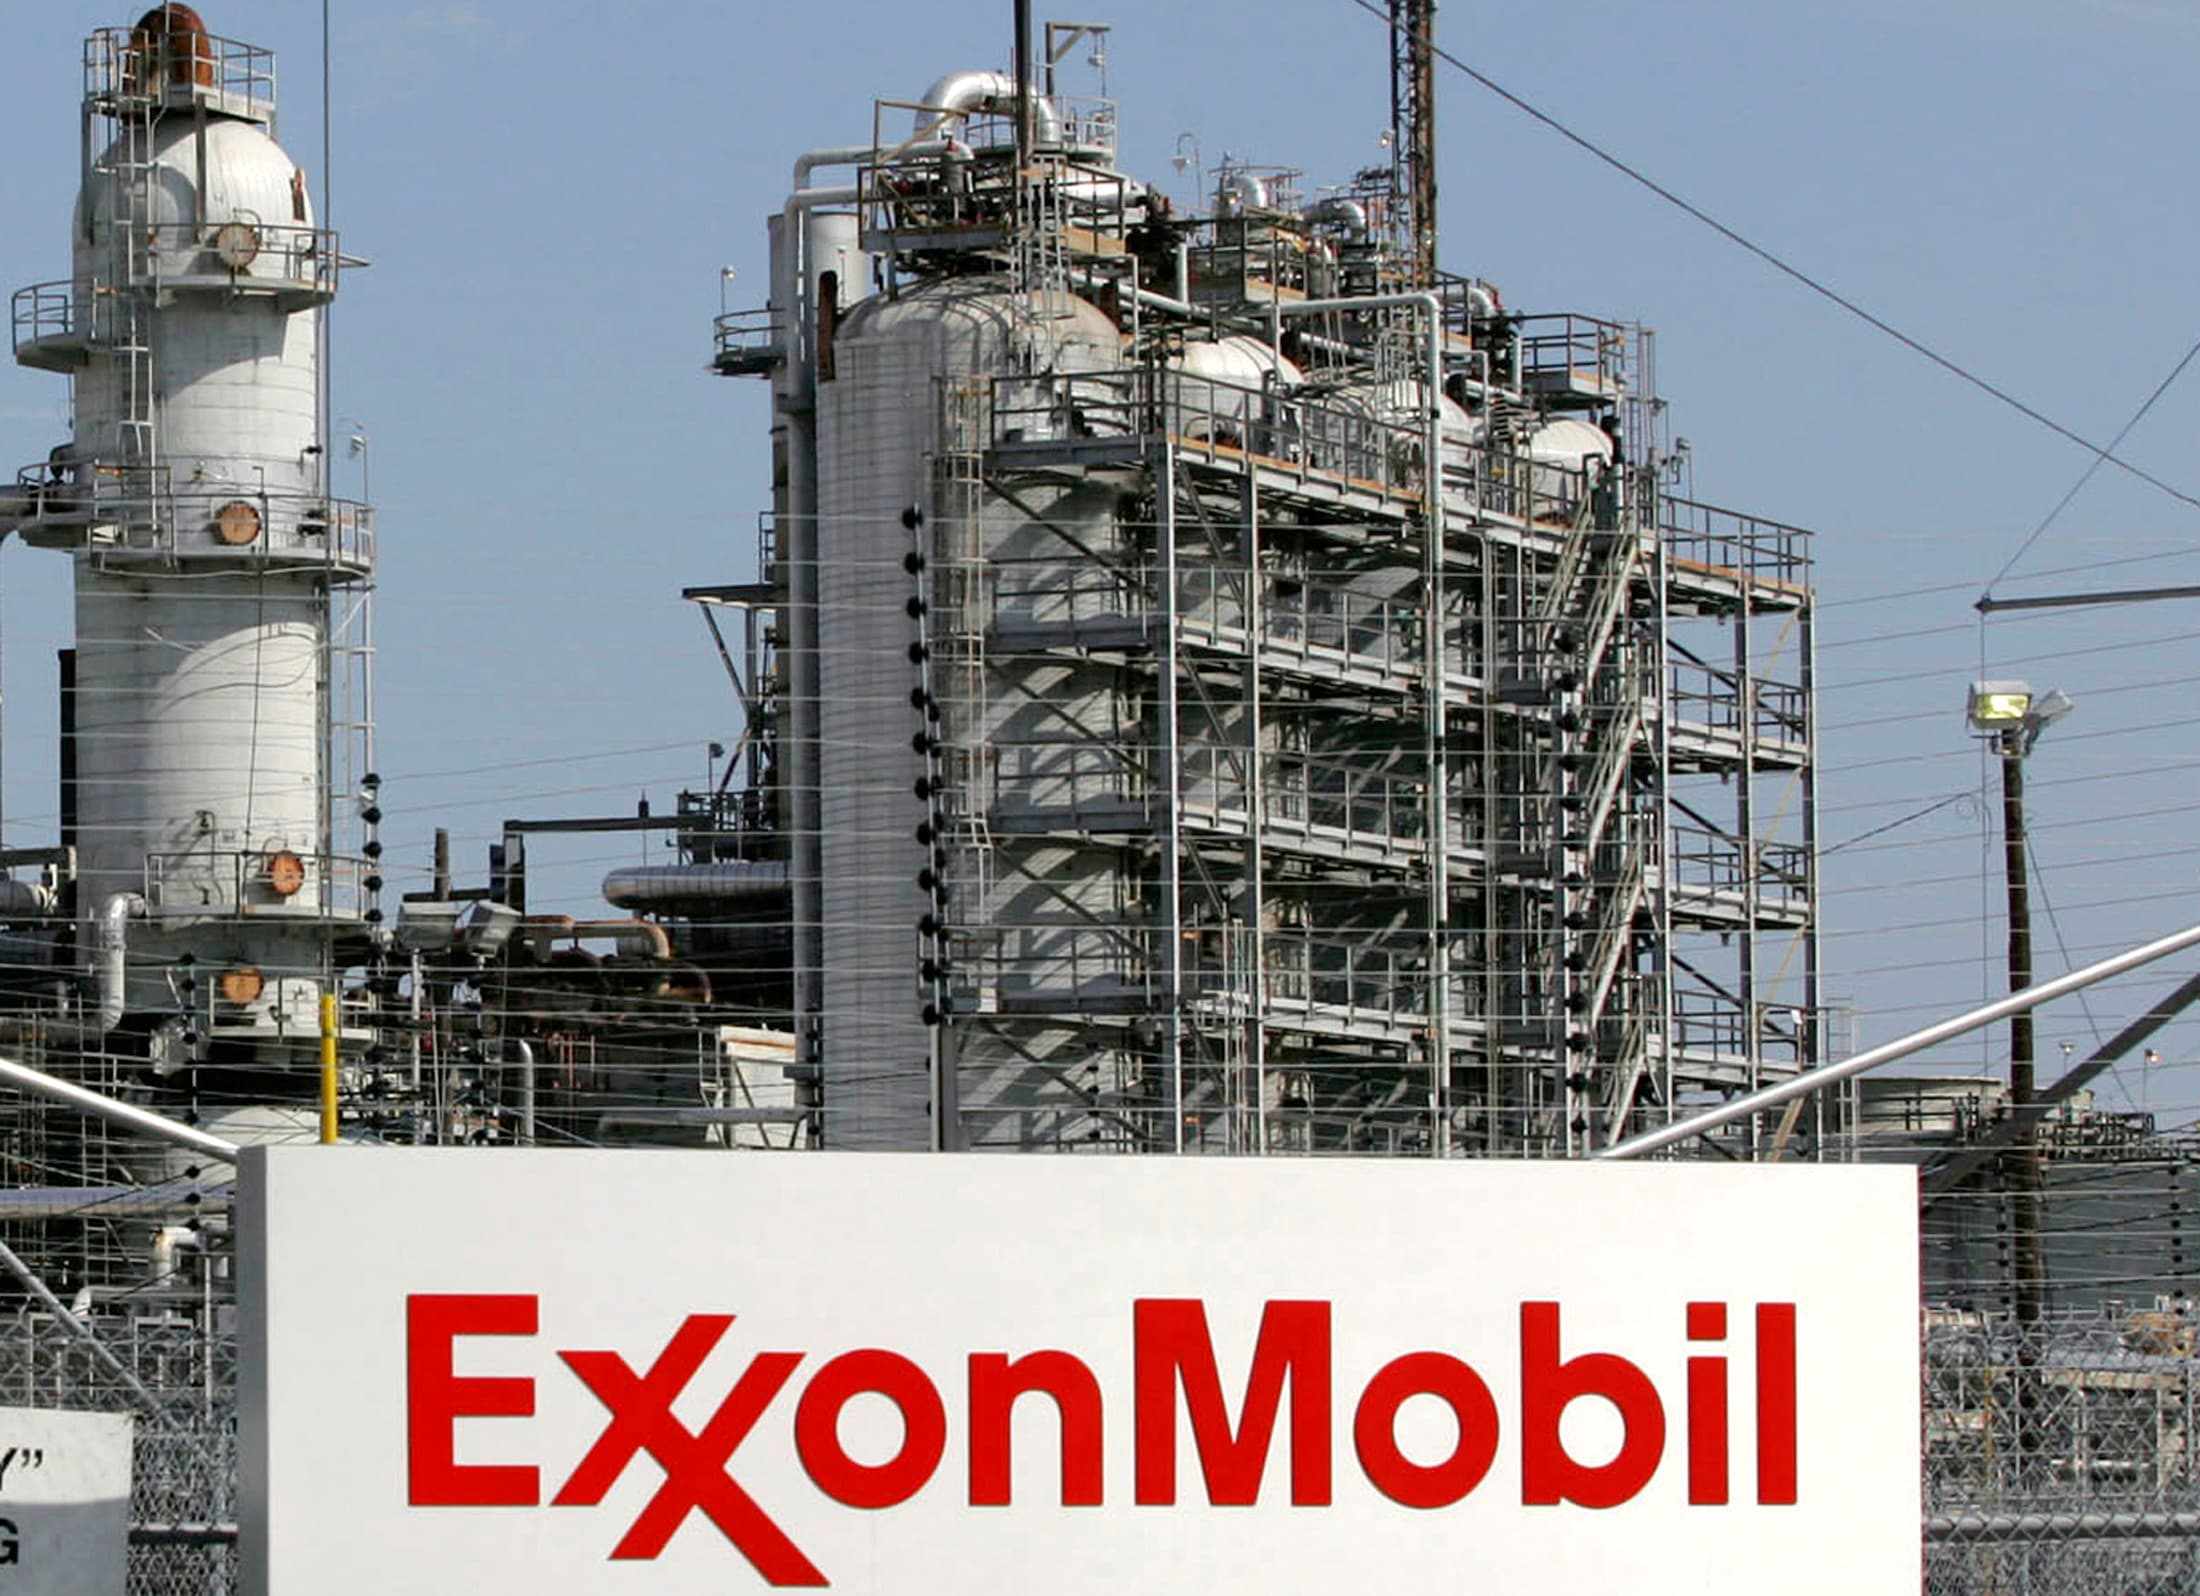 exxon loss profit streak company